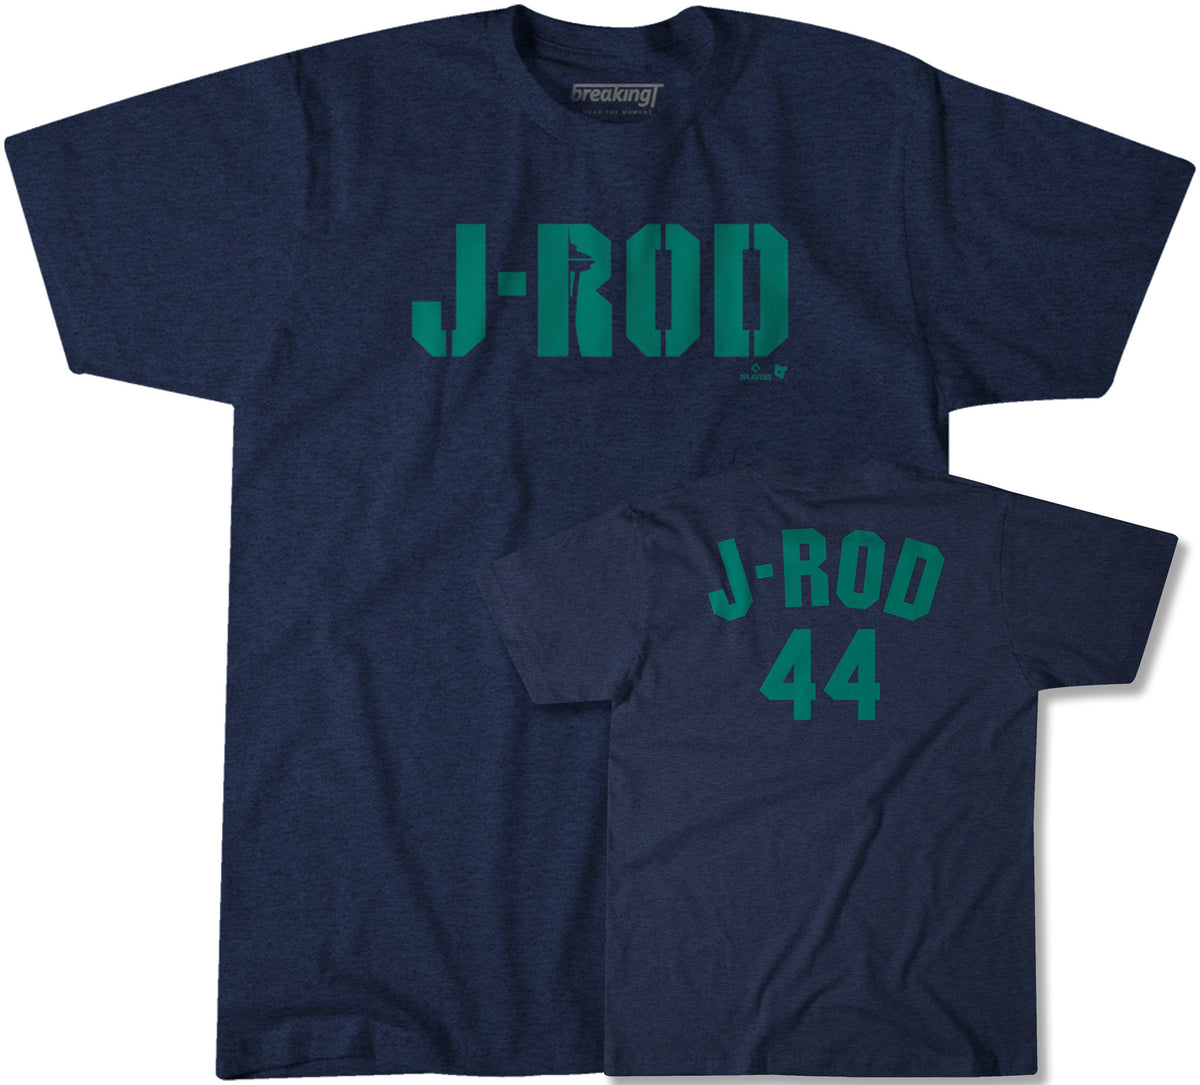 Julio Rodriguez: j-rod 44, Adult T-Shirt / Royal / 2XL - MLB - Royal - Sports Fan Gear | breakingt